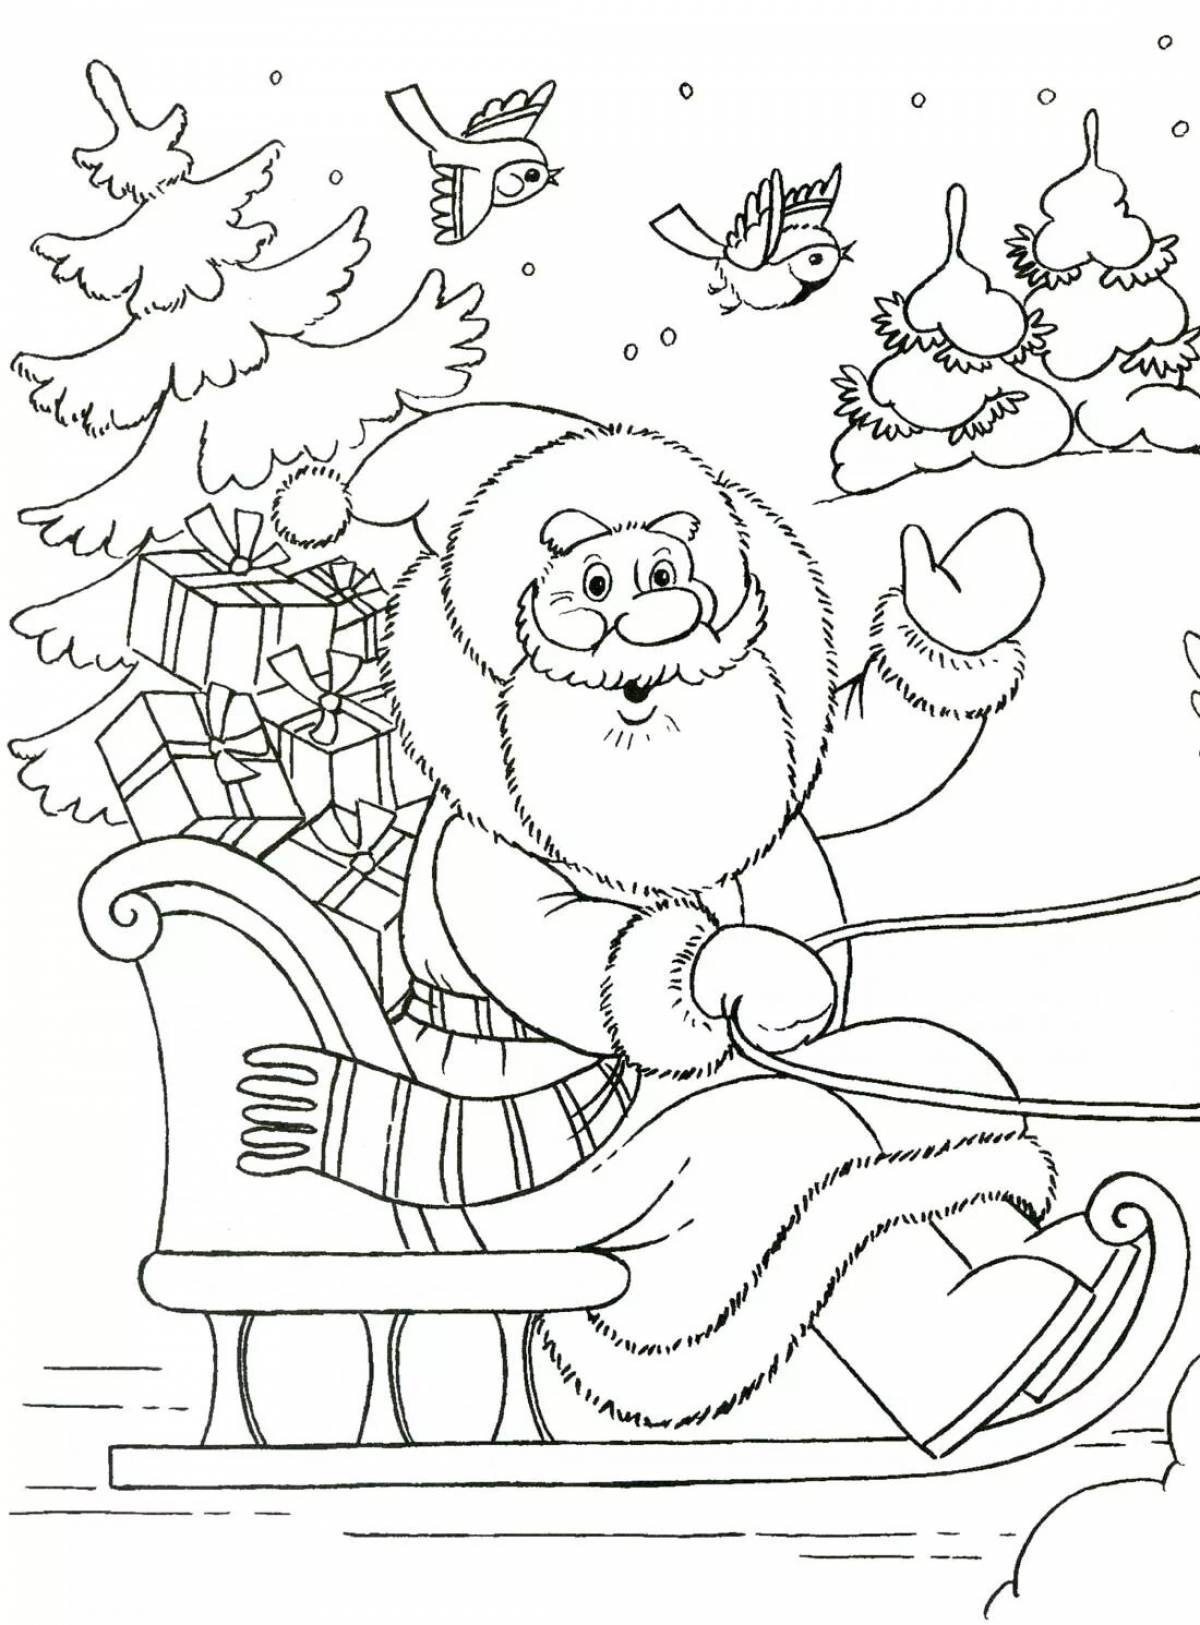 Santa Claus on a sled #5